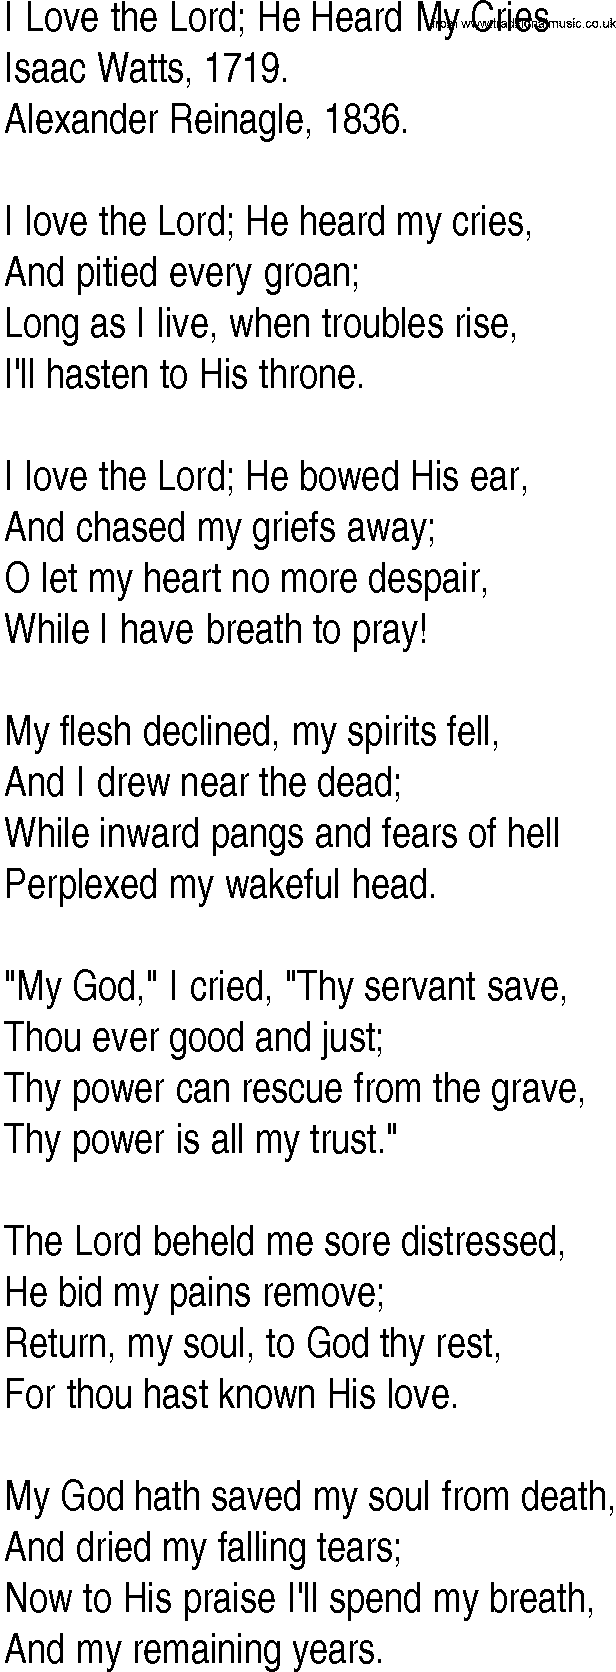 Hymn and Gospel Song: I Love the Lord; He Heard My Cries by Isaac Watts lyrics